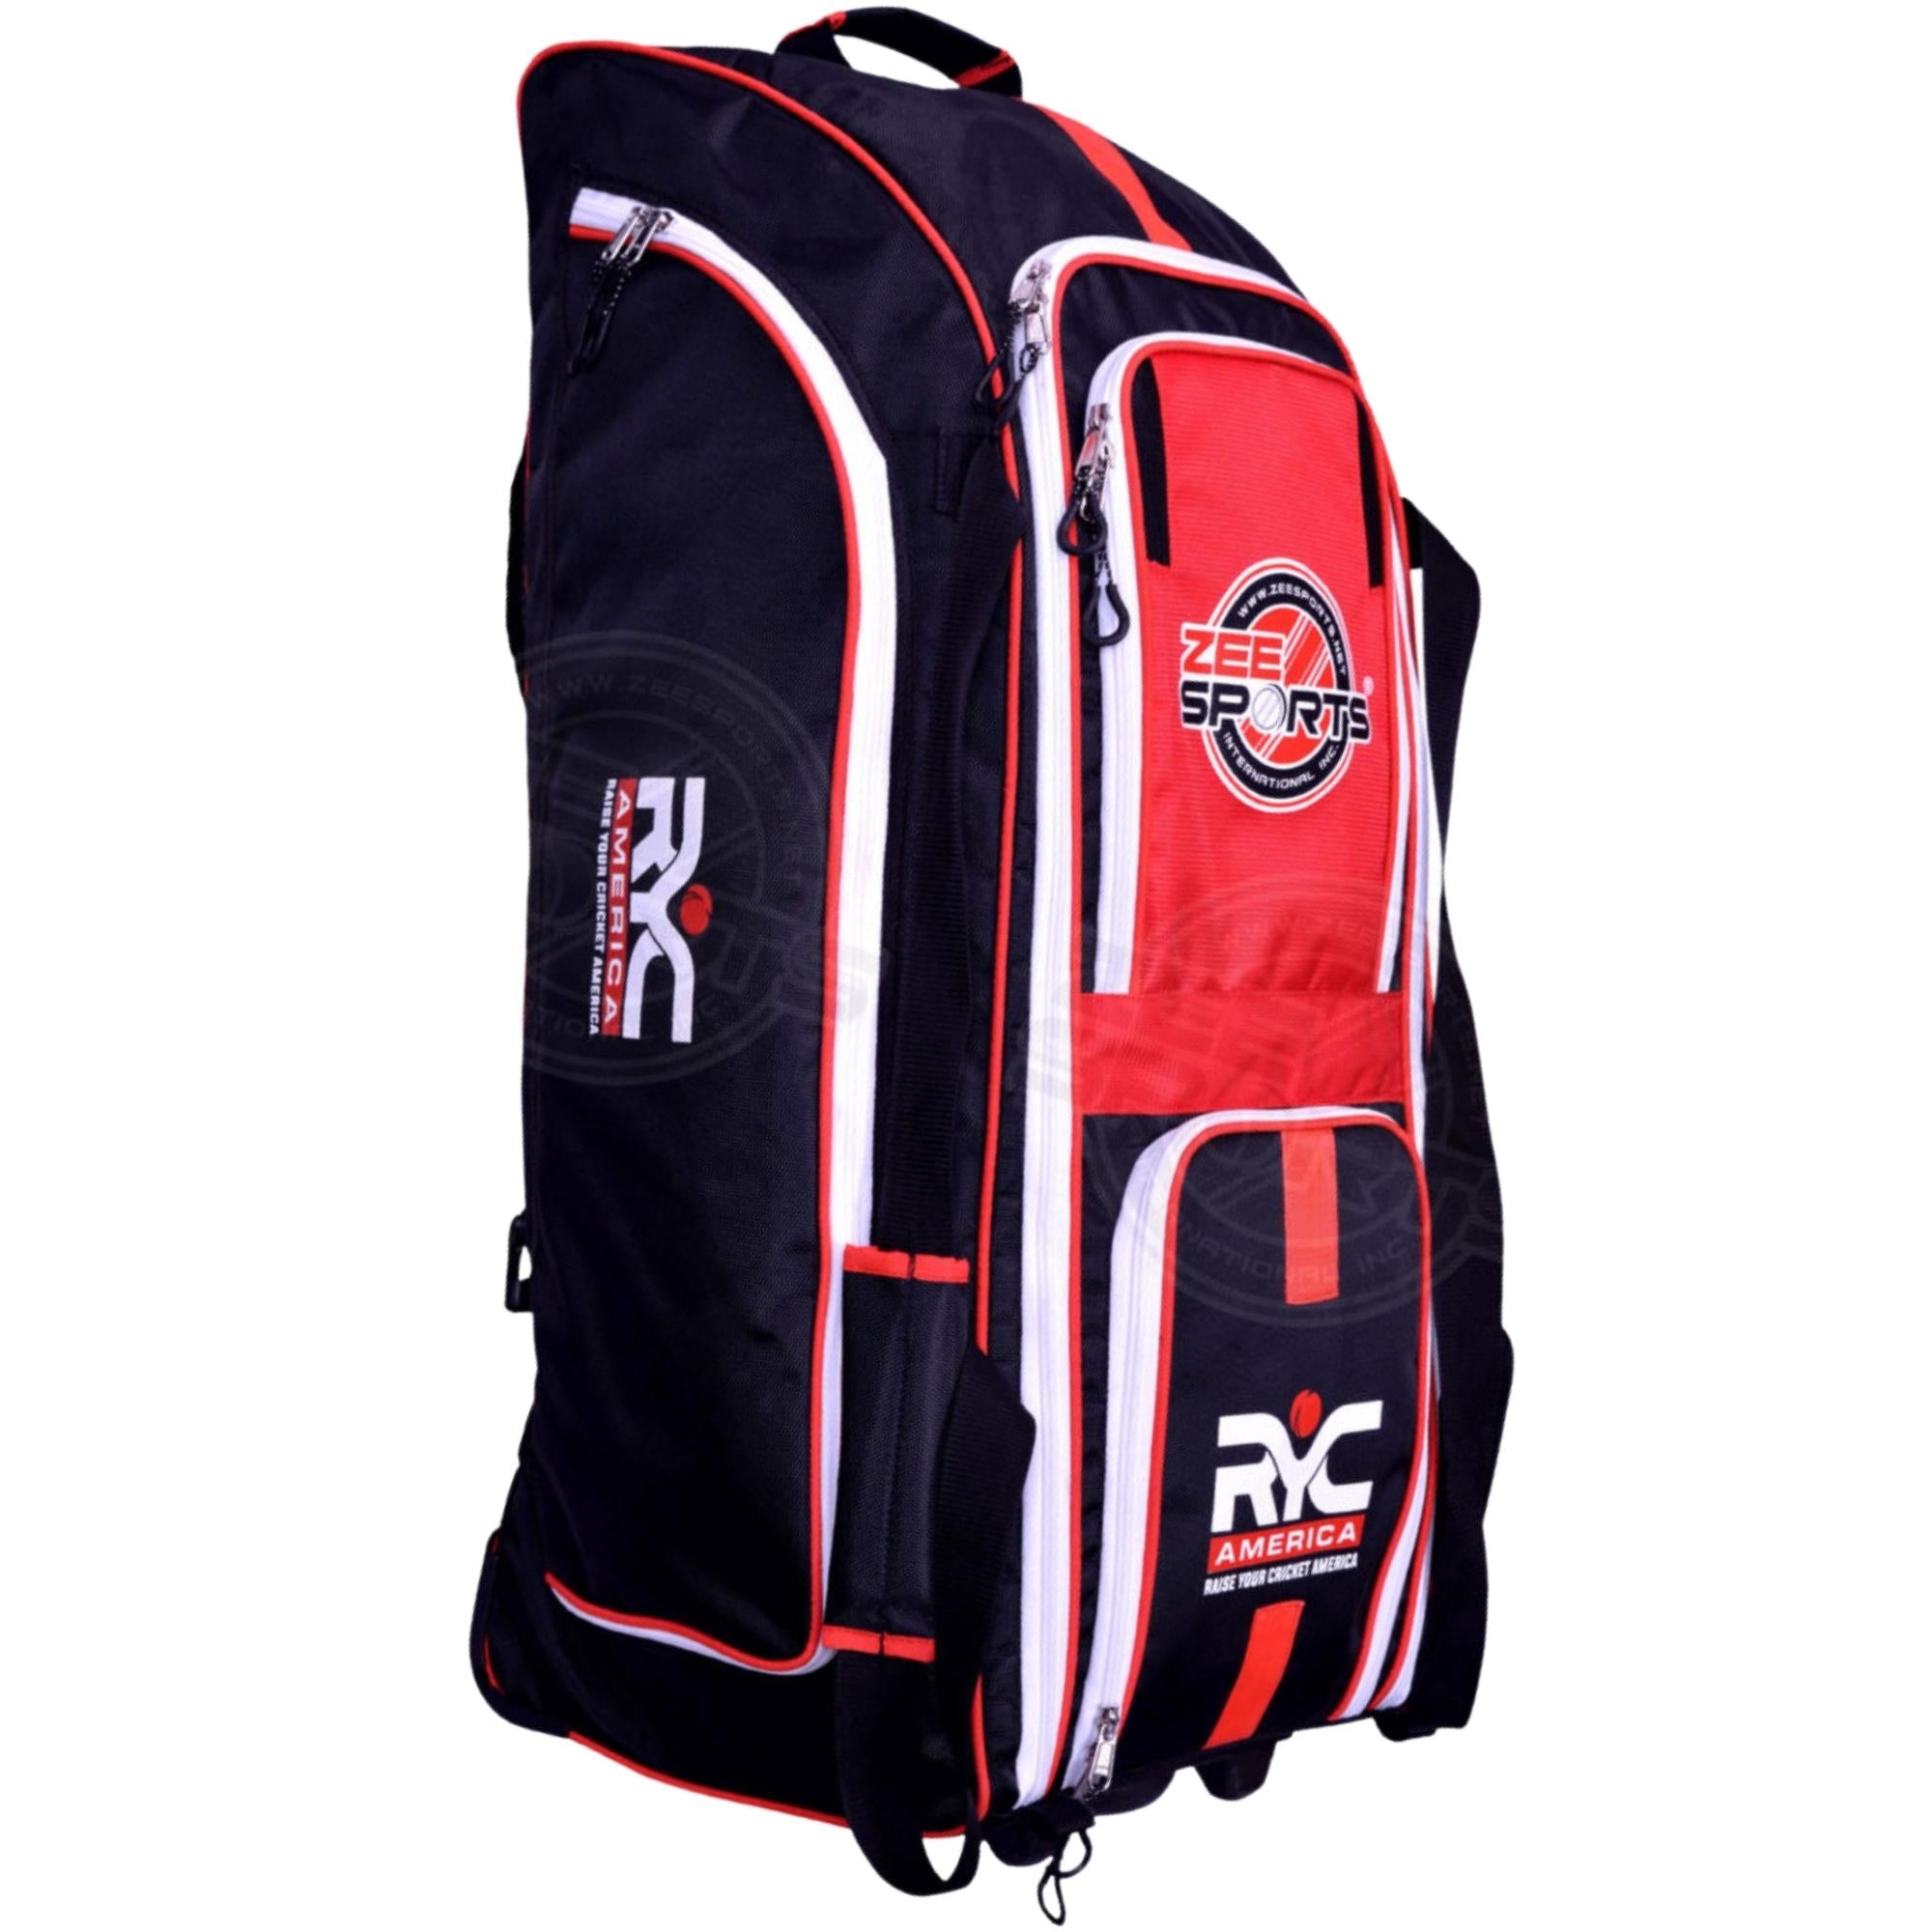 Zee Sports RYC Kit Bag  Back-Pack Youth